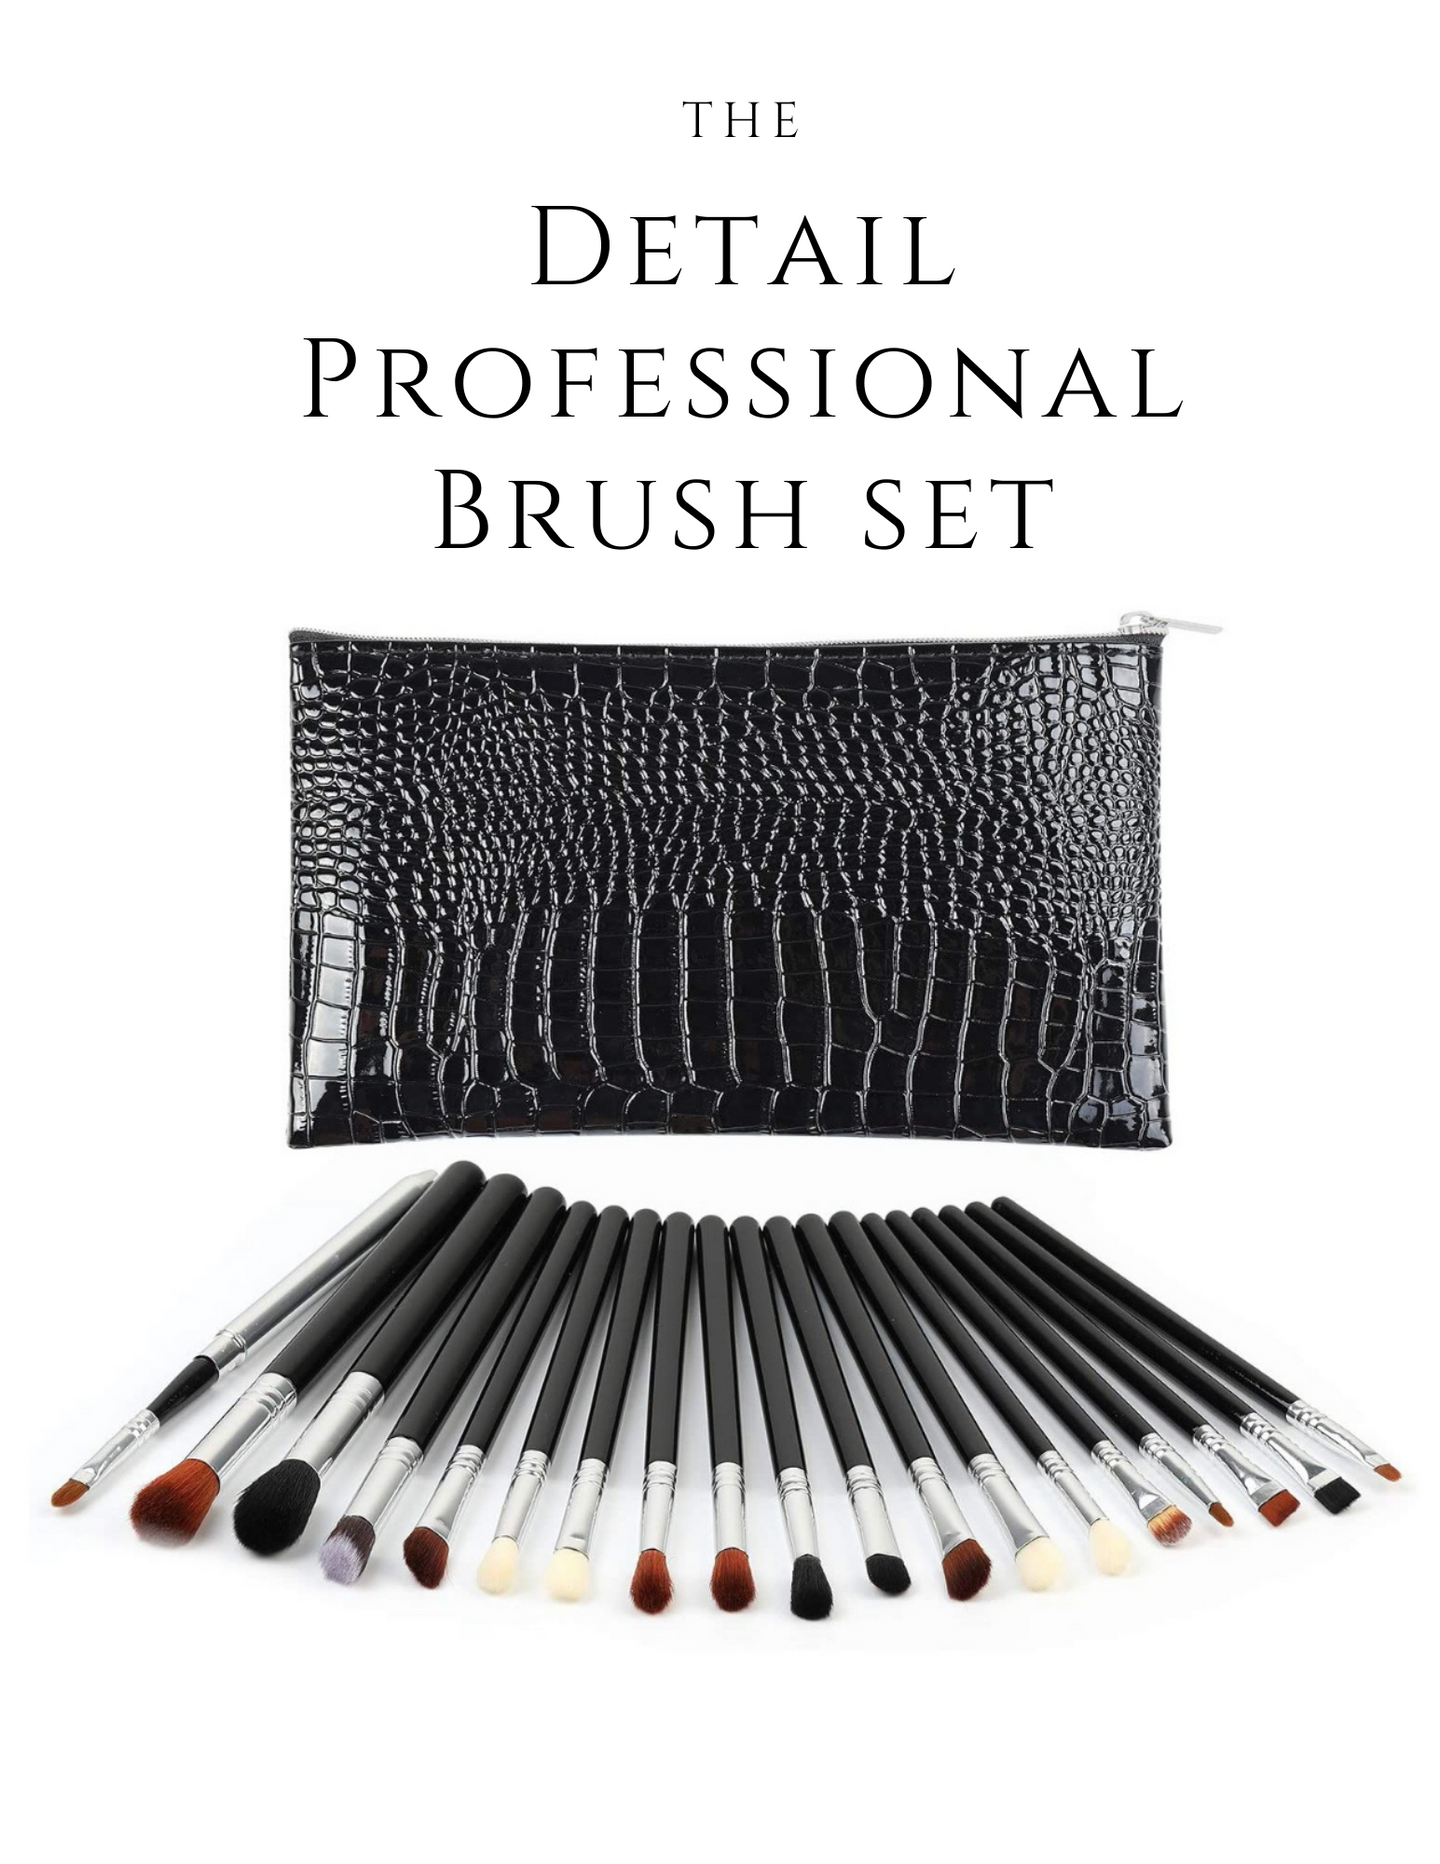 The DETAIL Professional Brush Set